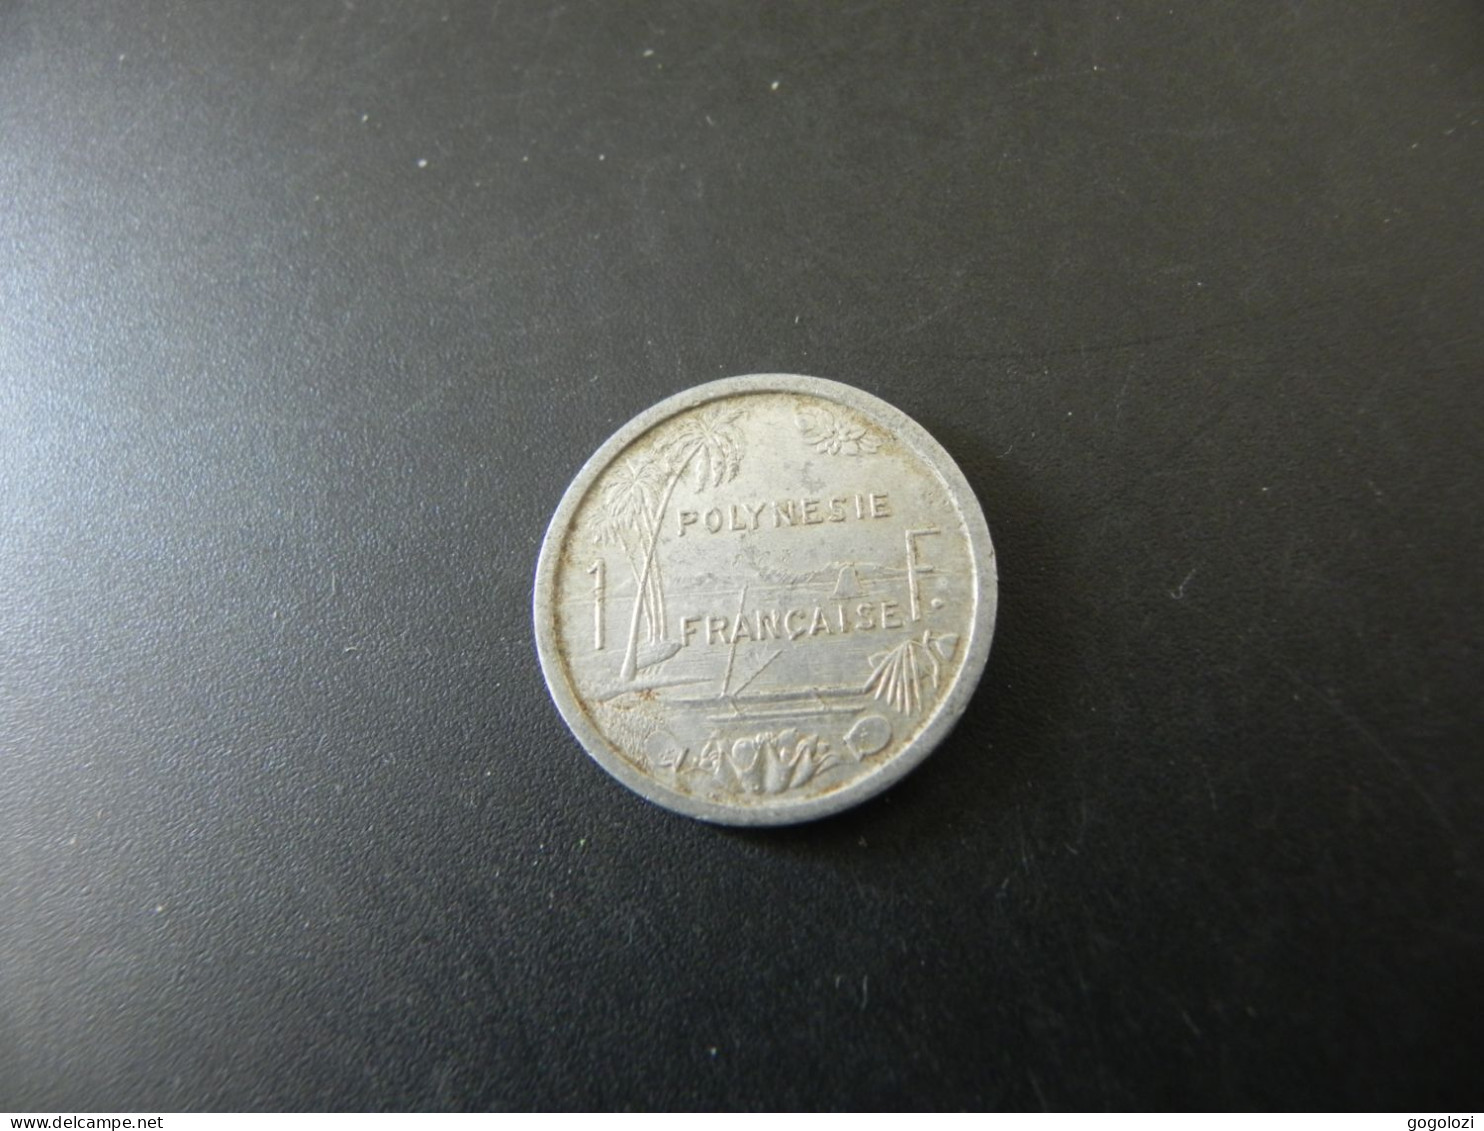 Polynesie Française 1 Franc 1965 - Polynésie Française